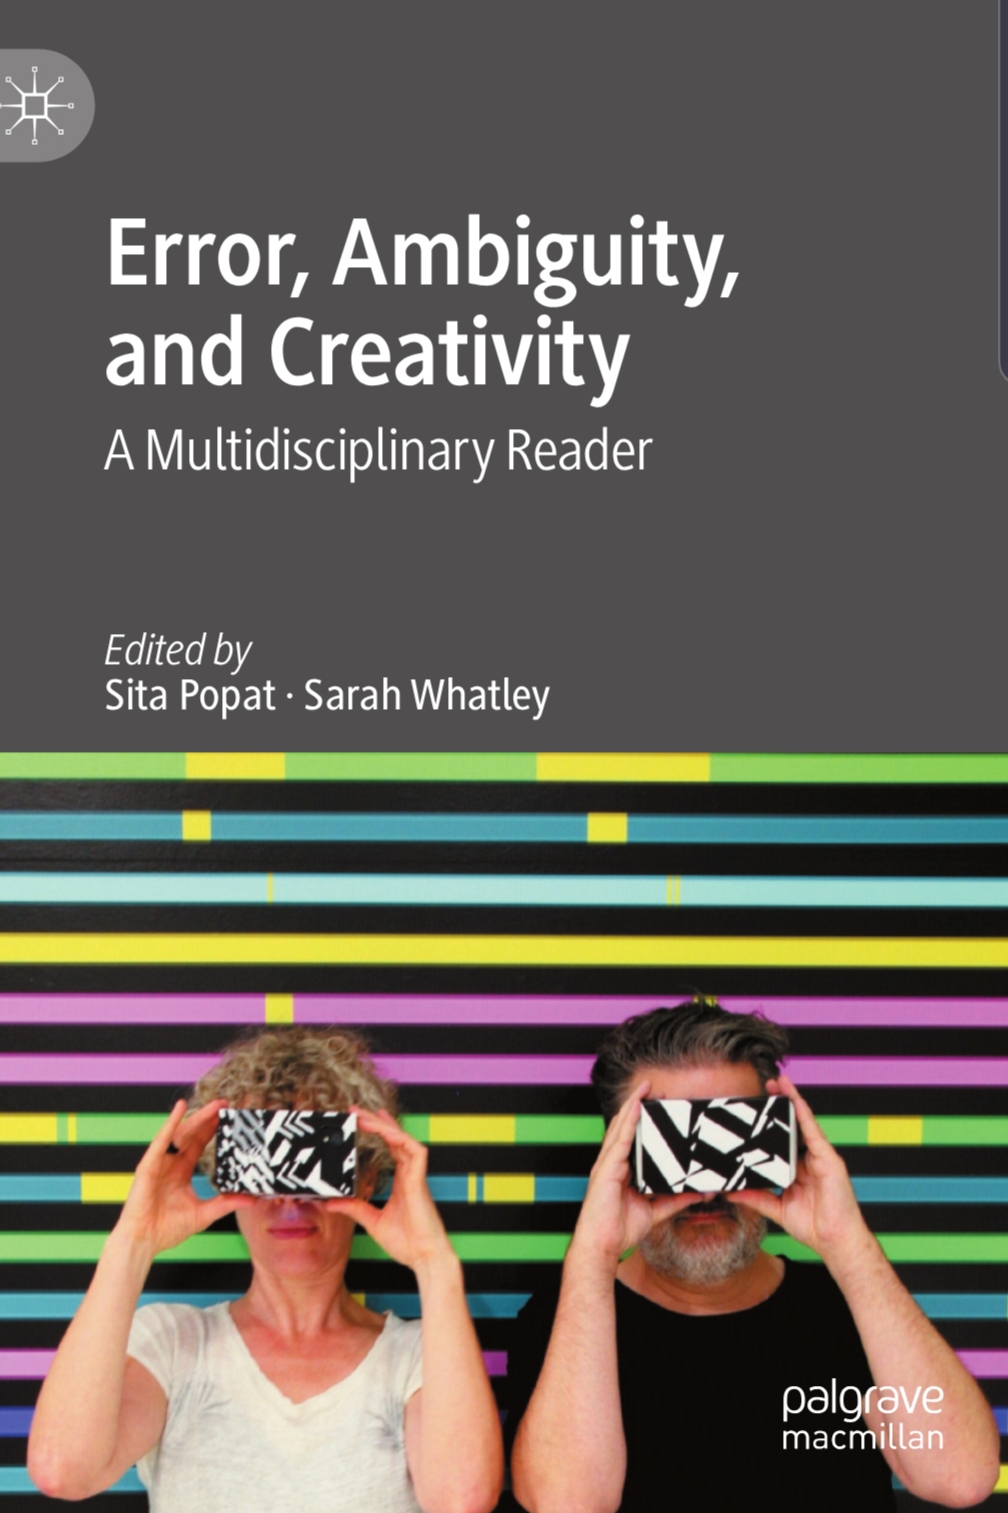 Sita Popat, Sarah Whatley (Edited by), Error, Ambiguity, and Creativity: A Multidisciplinary Reader. Springer